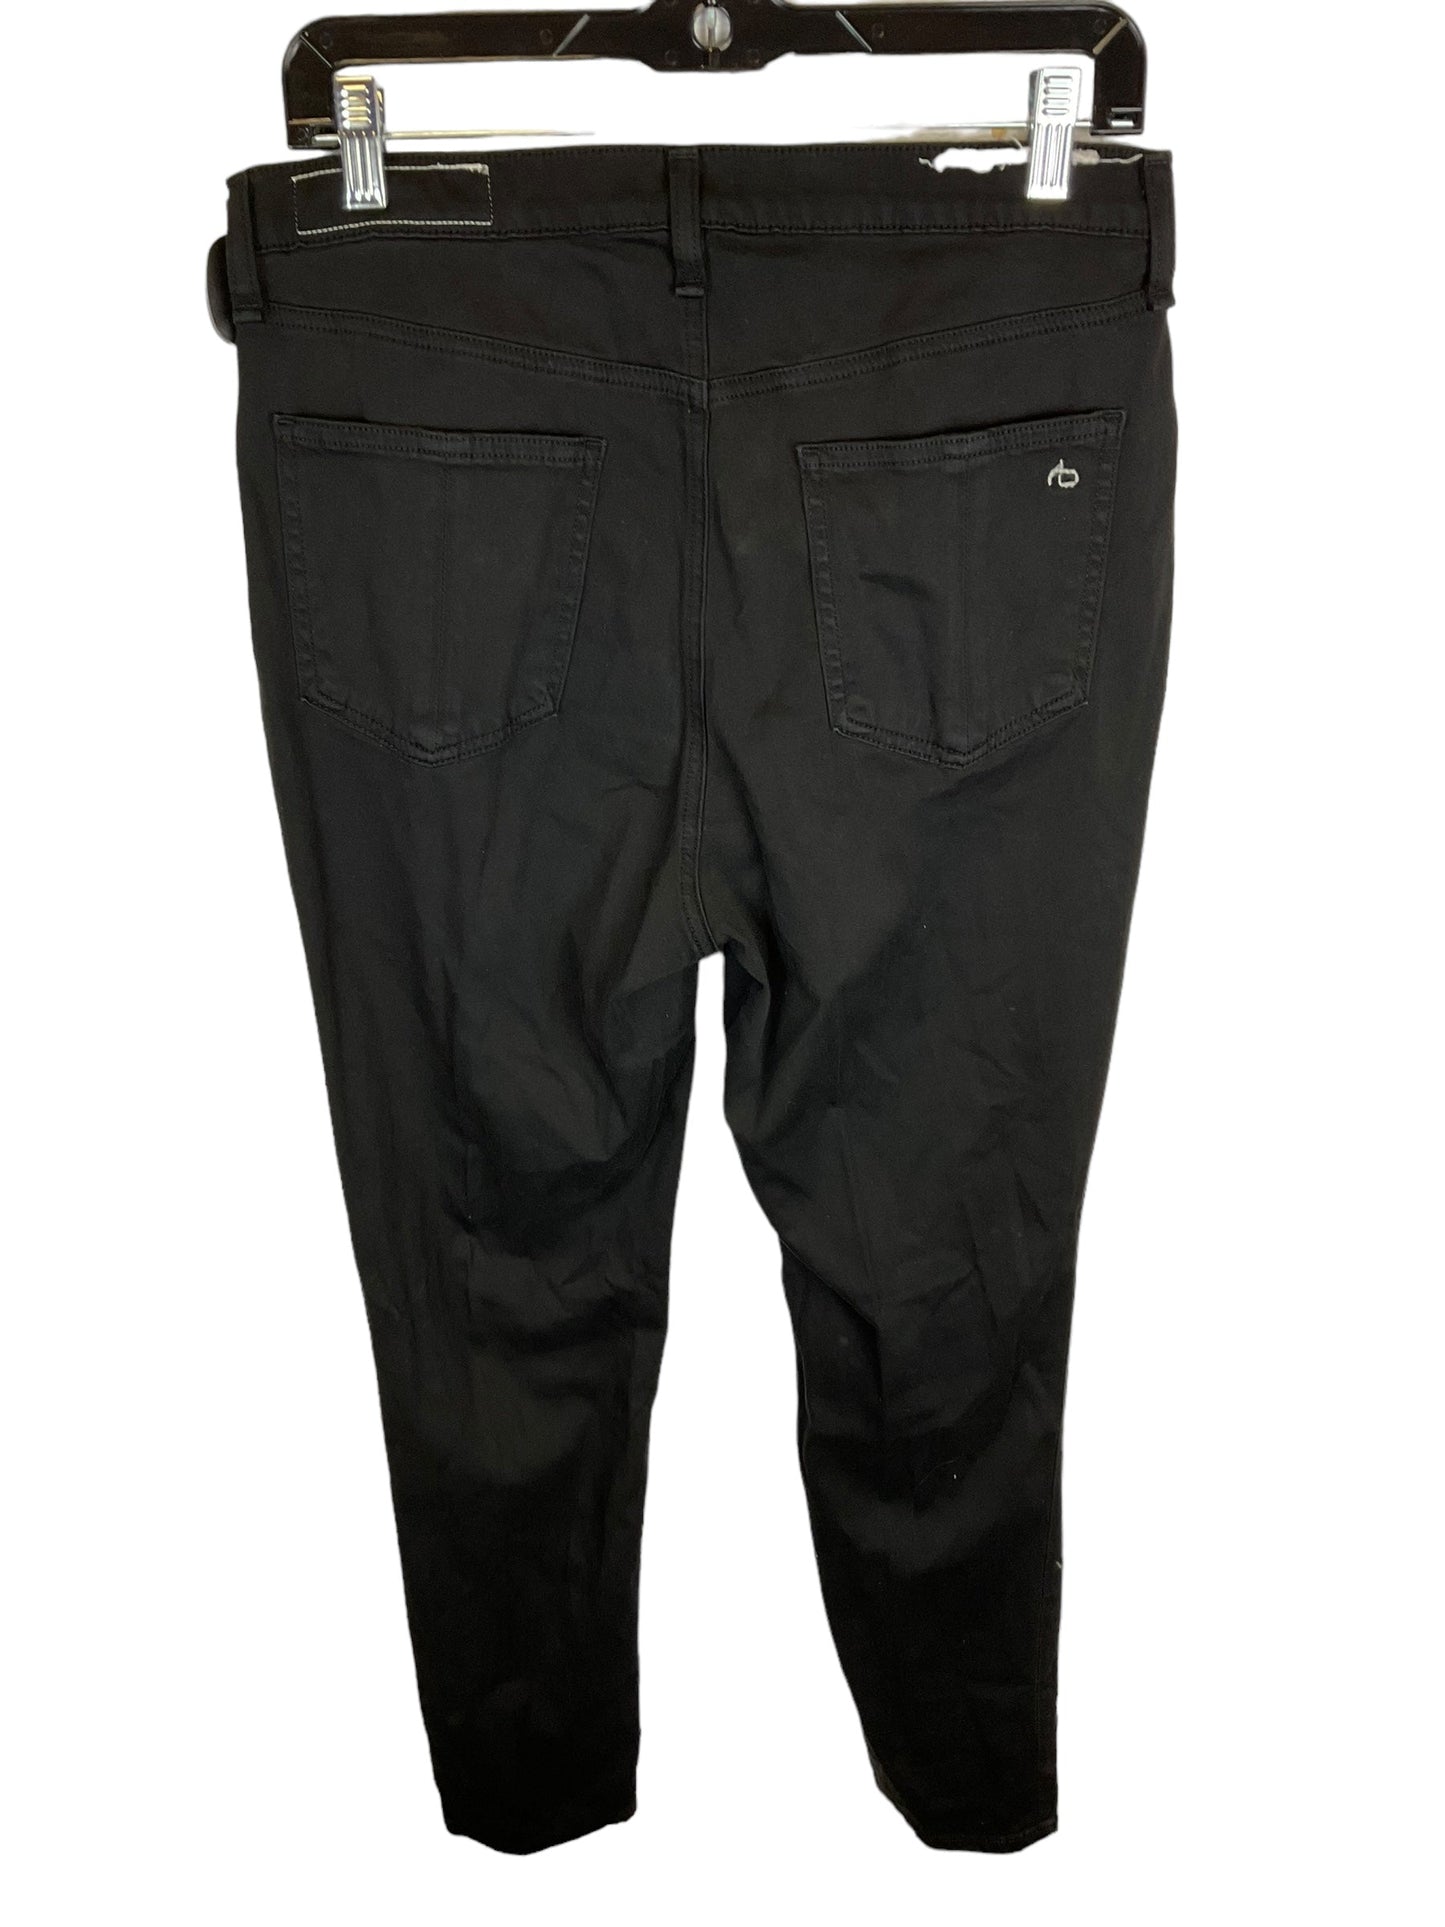 Black Denim Pants Cargo & Utility Rag & Bones Jeans, Size 12